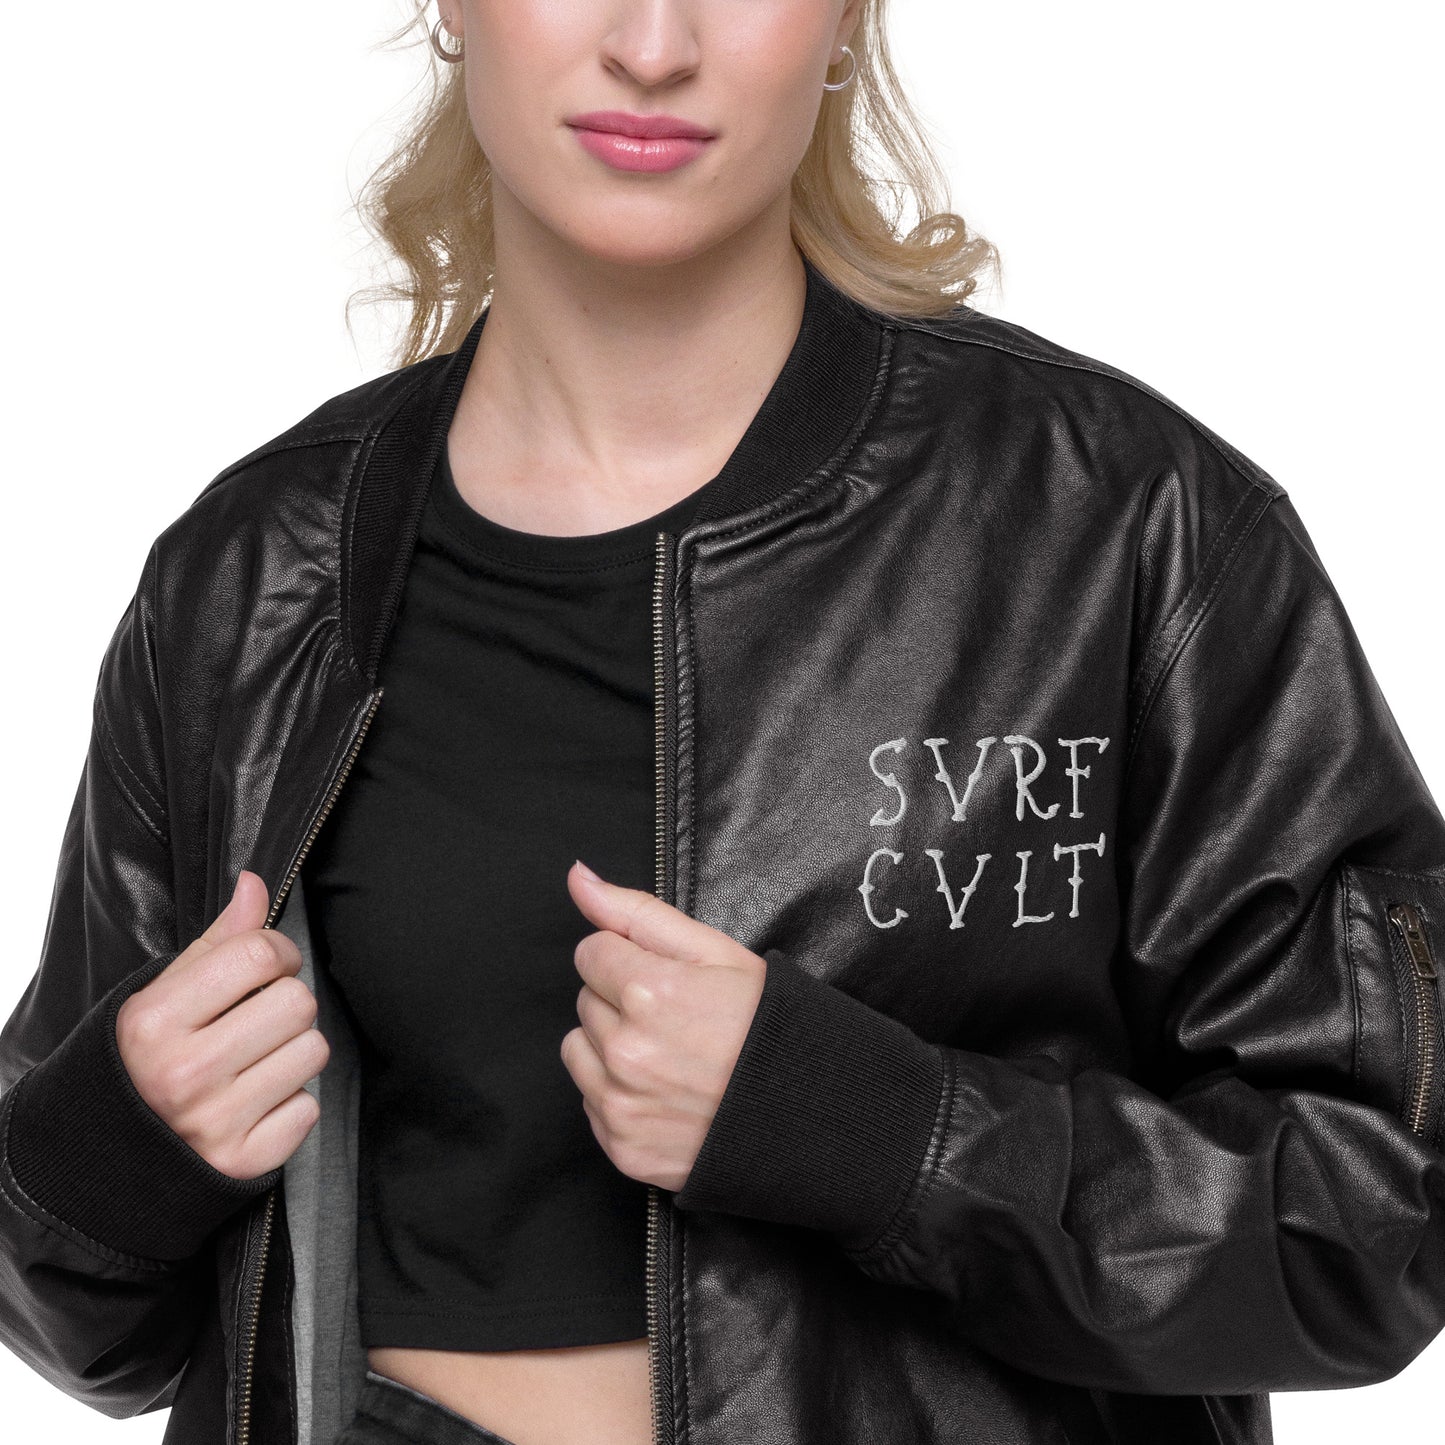 SVRF CVLT Leather Bomber Jacket